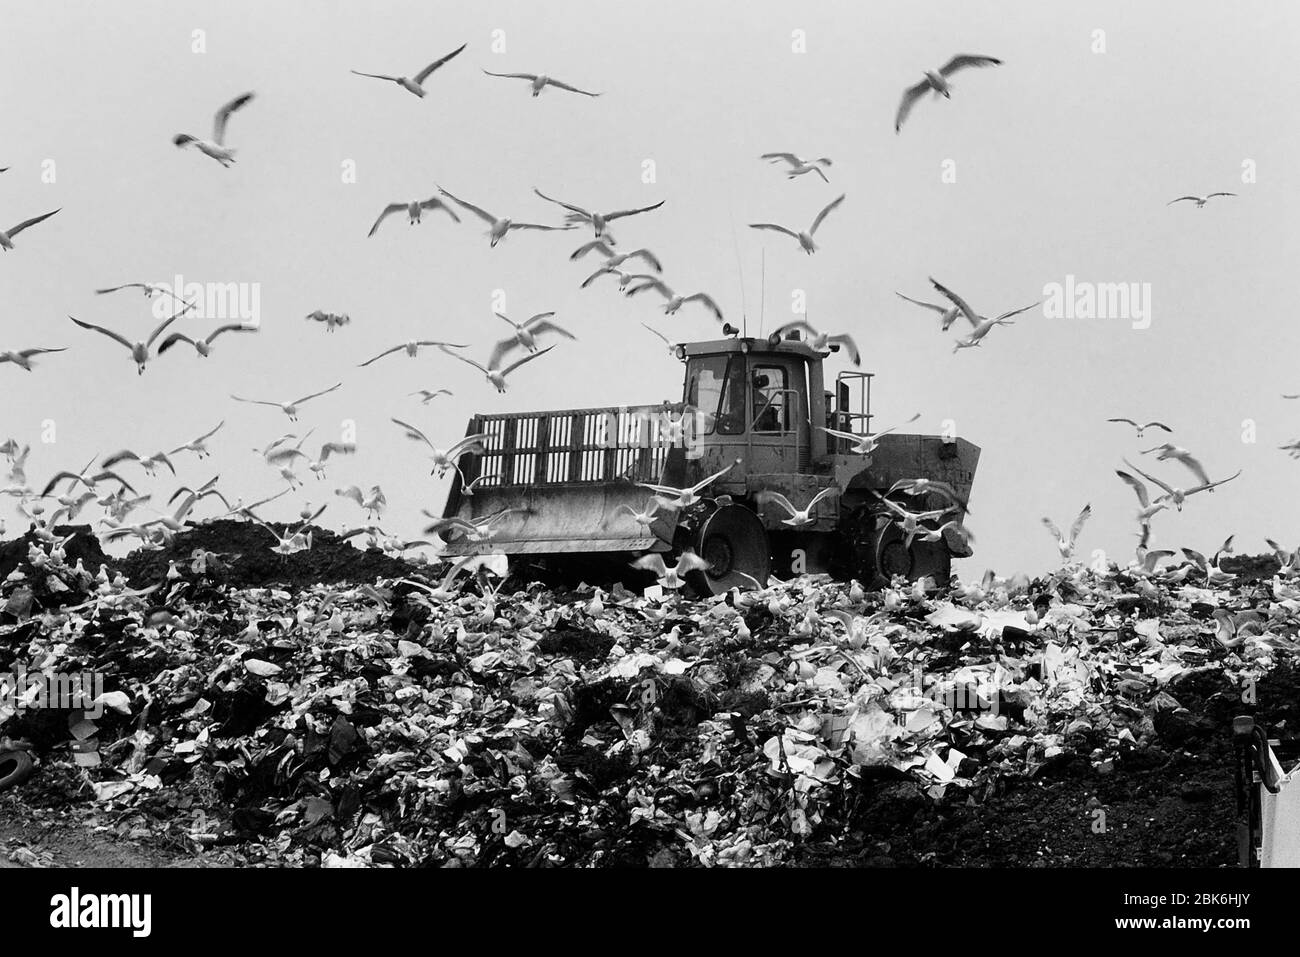 Landfill waste disposal site. UK Stock Photo